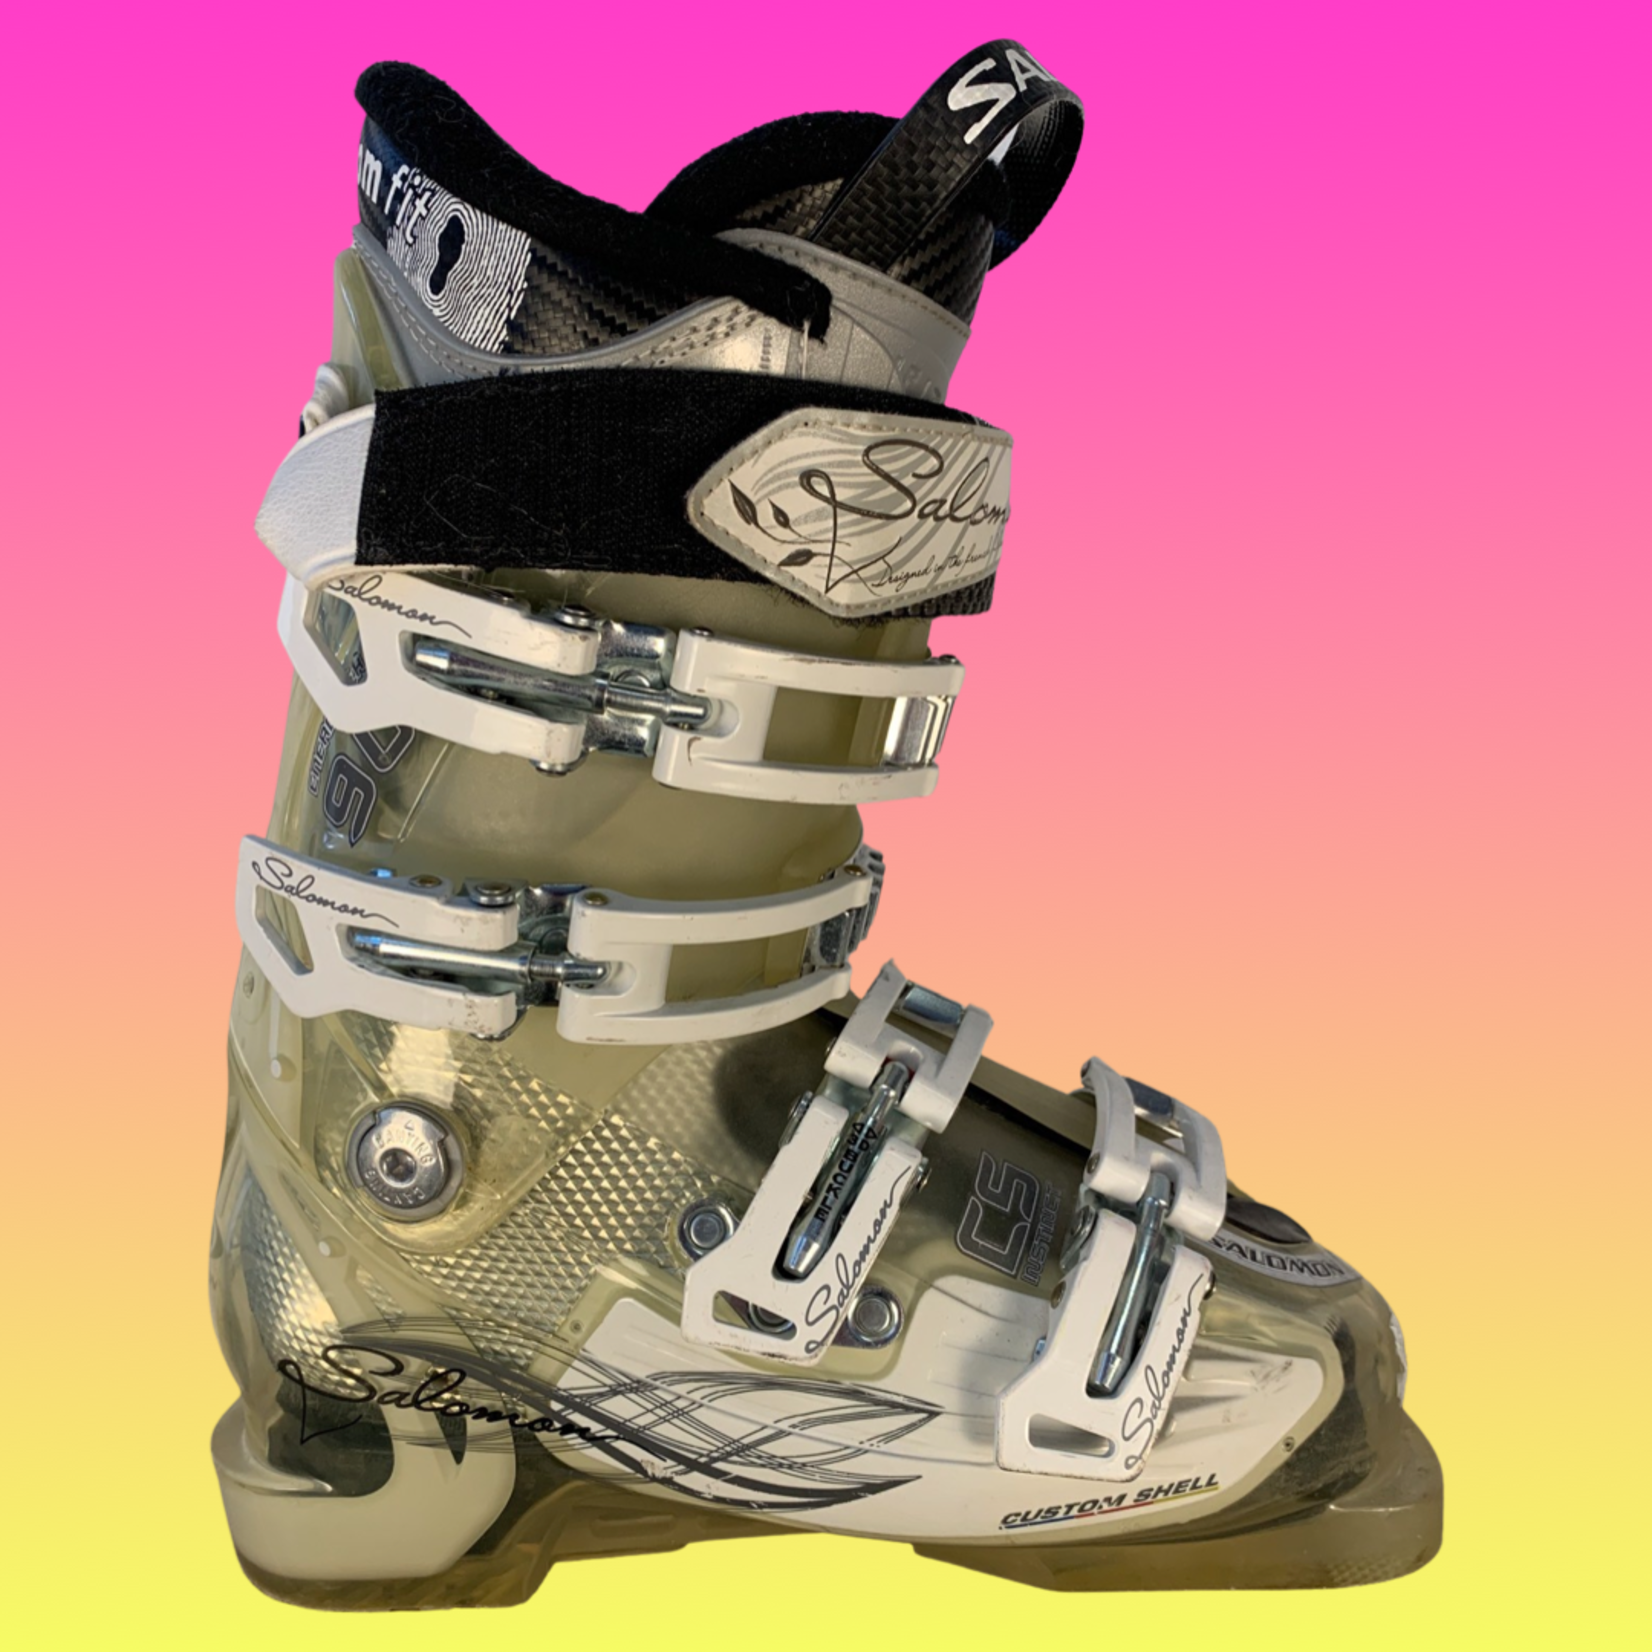 Salomon Salomon C5 Instinct Ski Boots Size 23